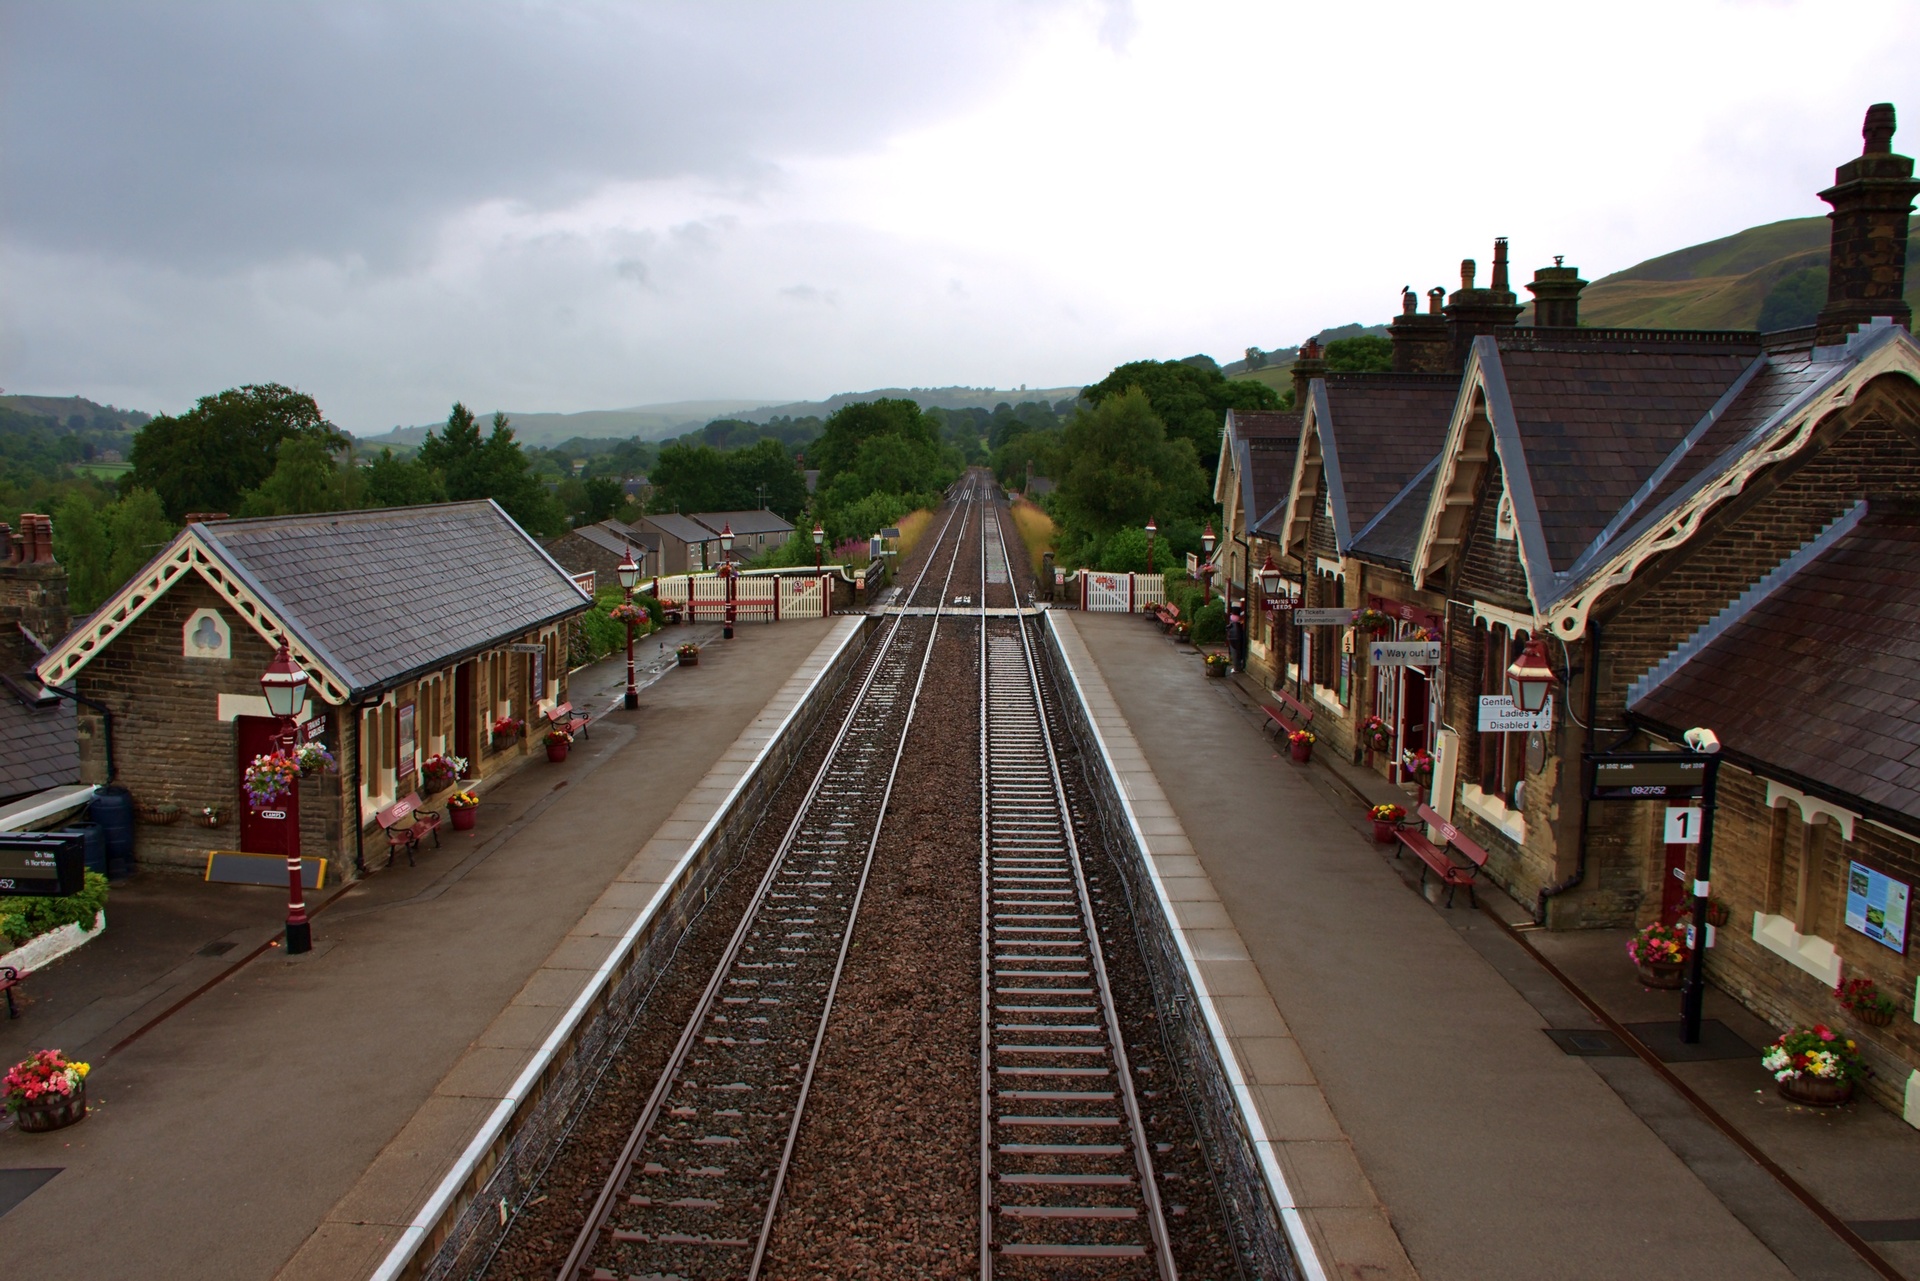 Settle Railway Station